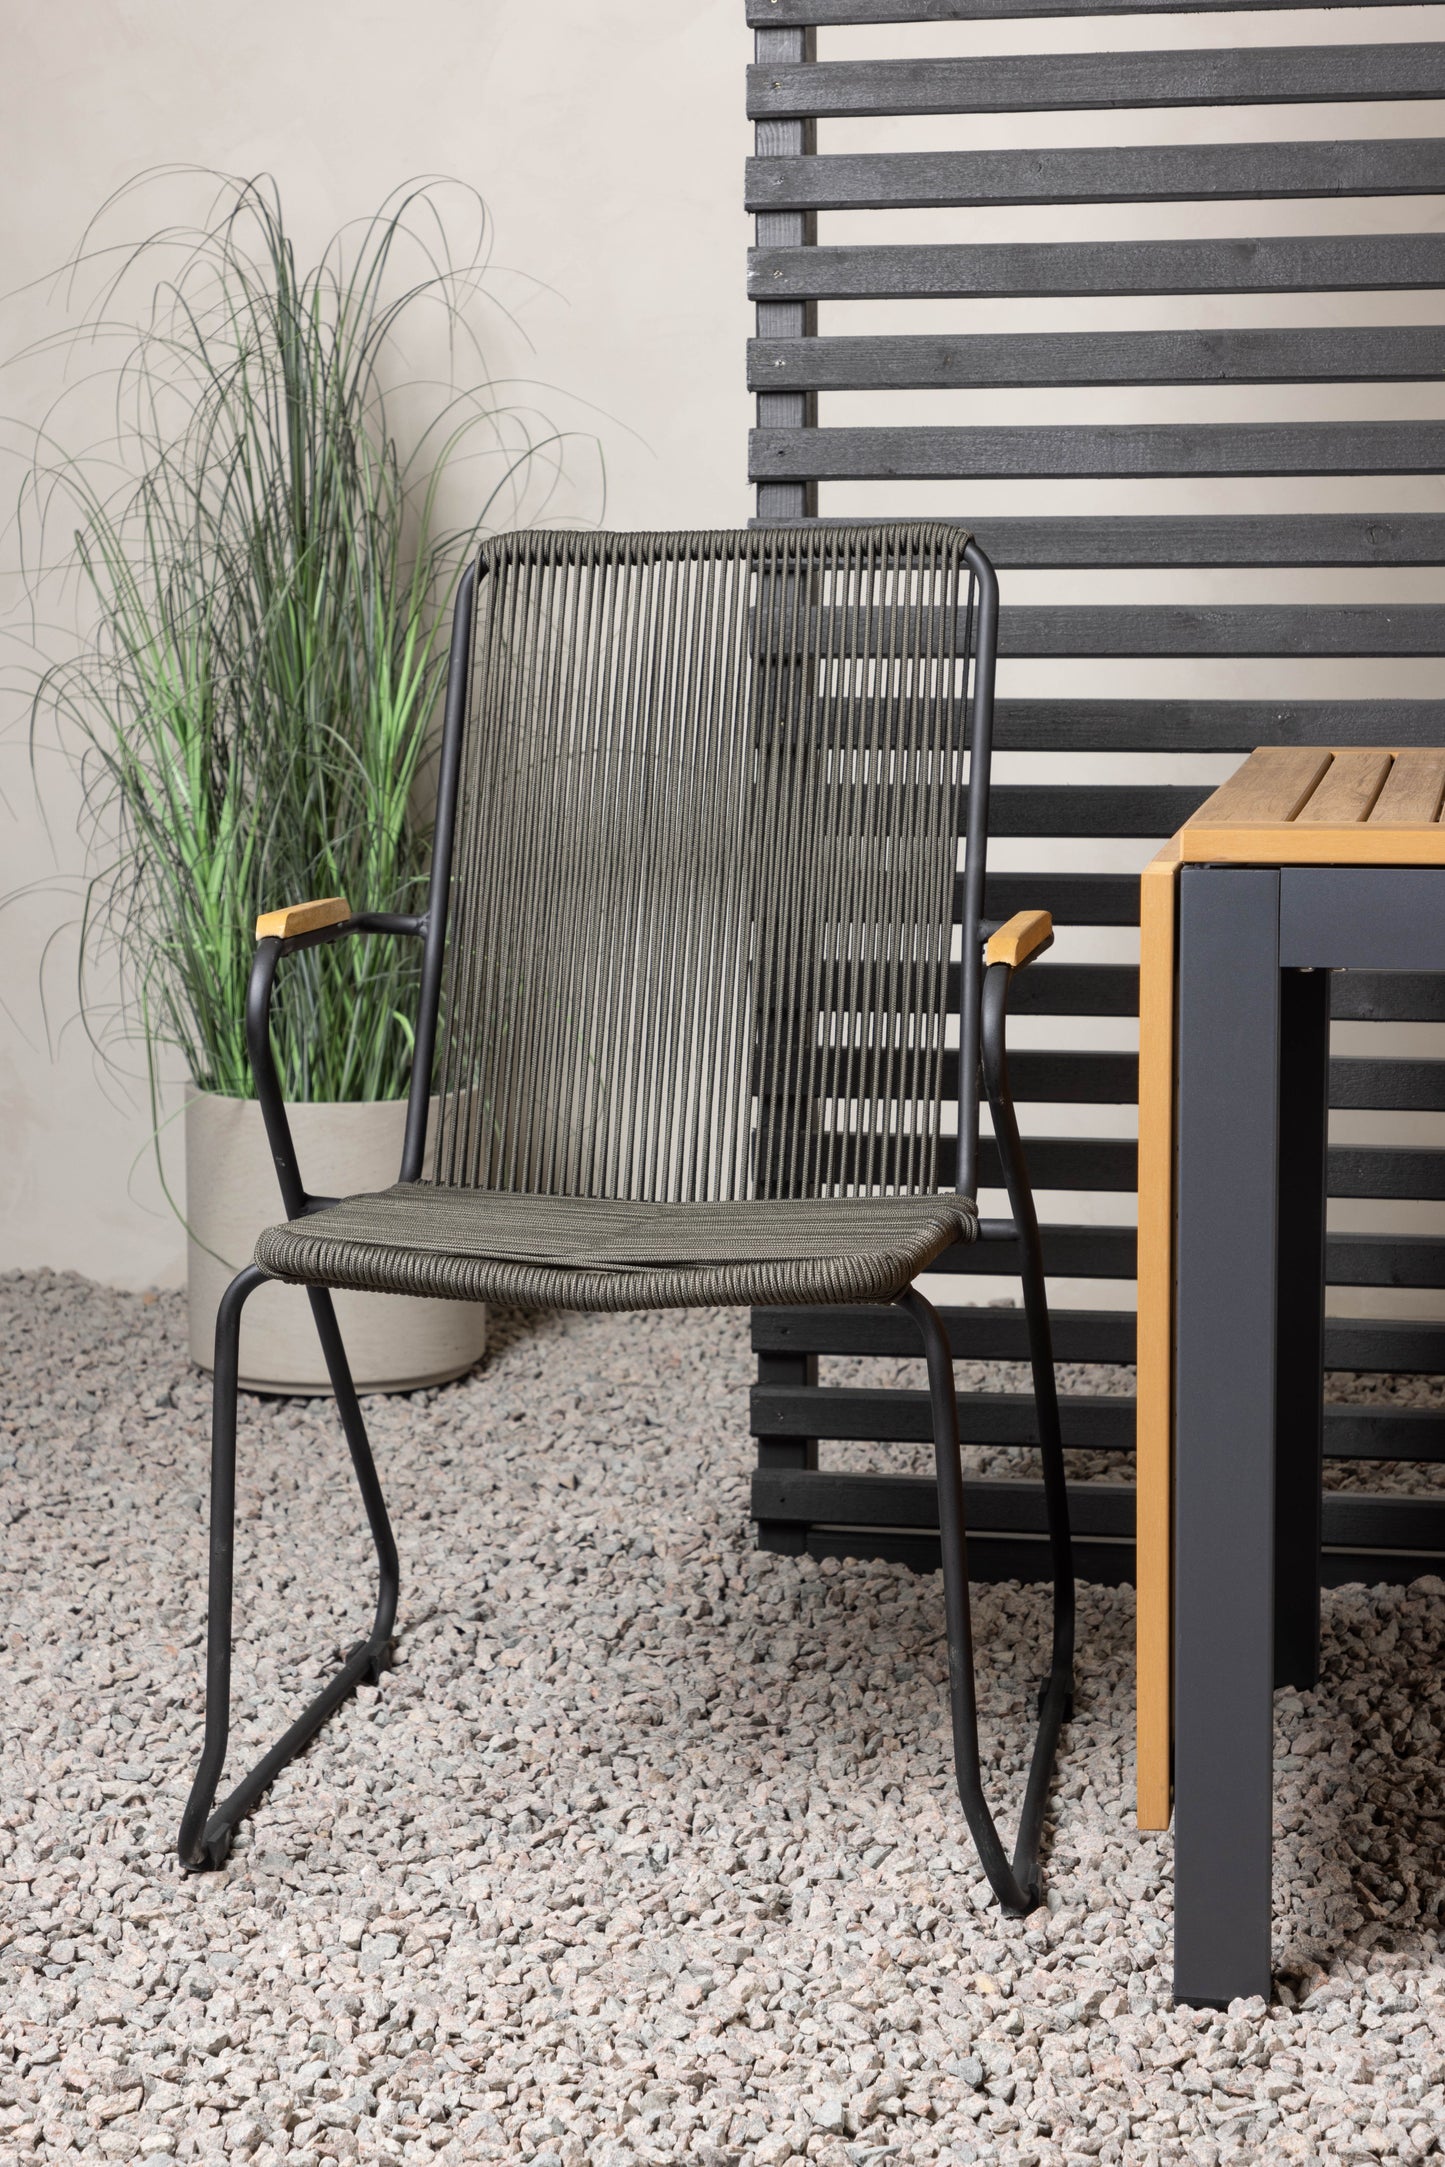 Diego - Cafébord, Aluminium - Sort / Brun Nonwood - Rektangulær 70*70/130* + Bois stol Stål - Sort / Mørkegråt Reb